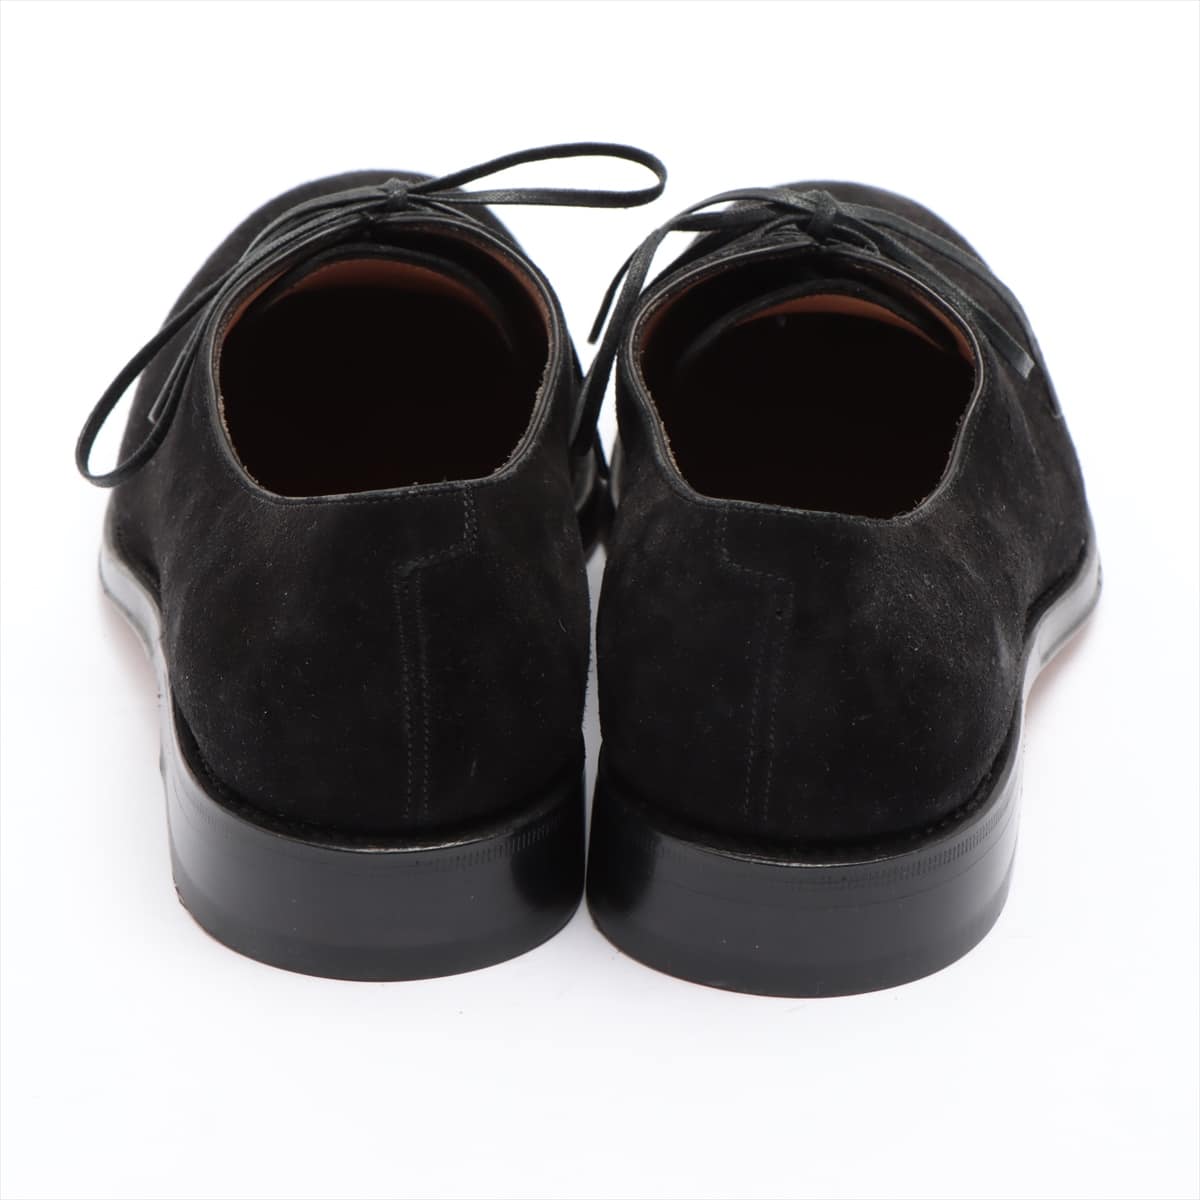 Ferragamo Suede Dress shoes 6EE Men's Black Resoled